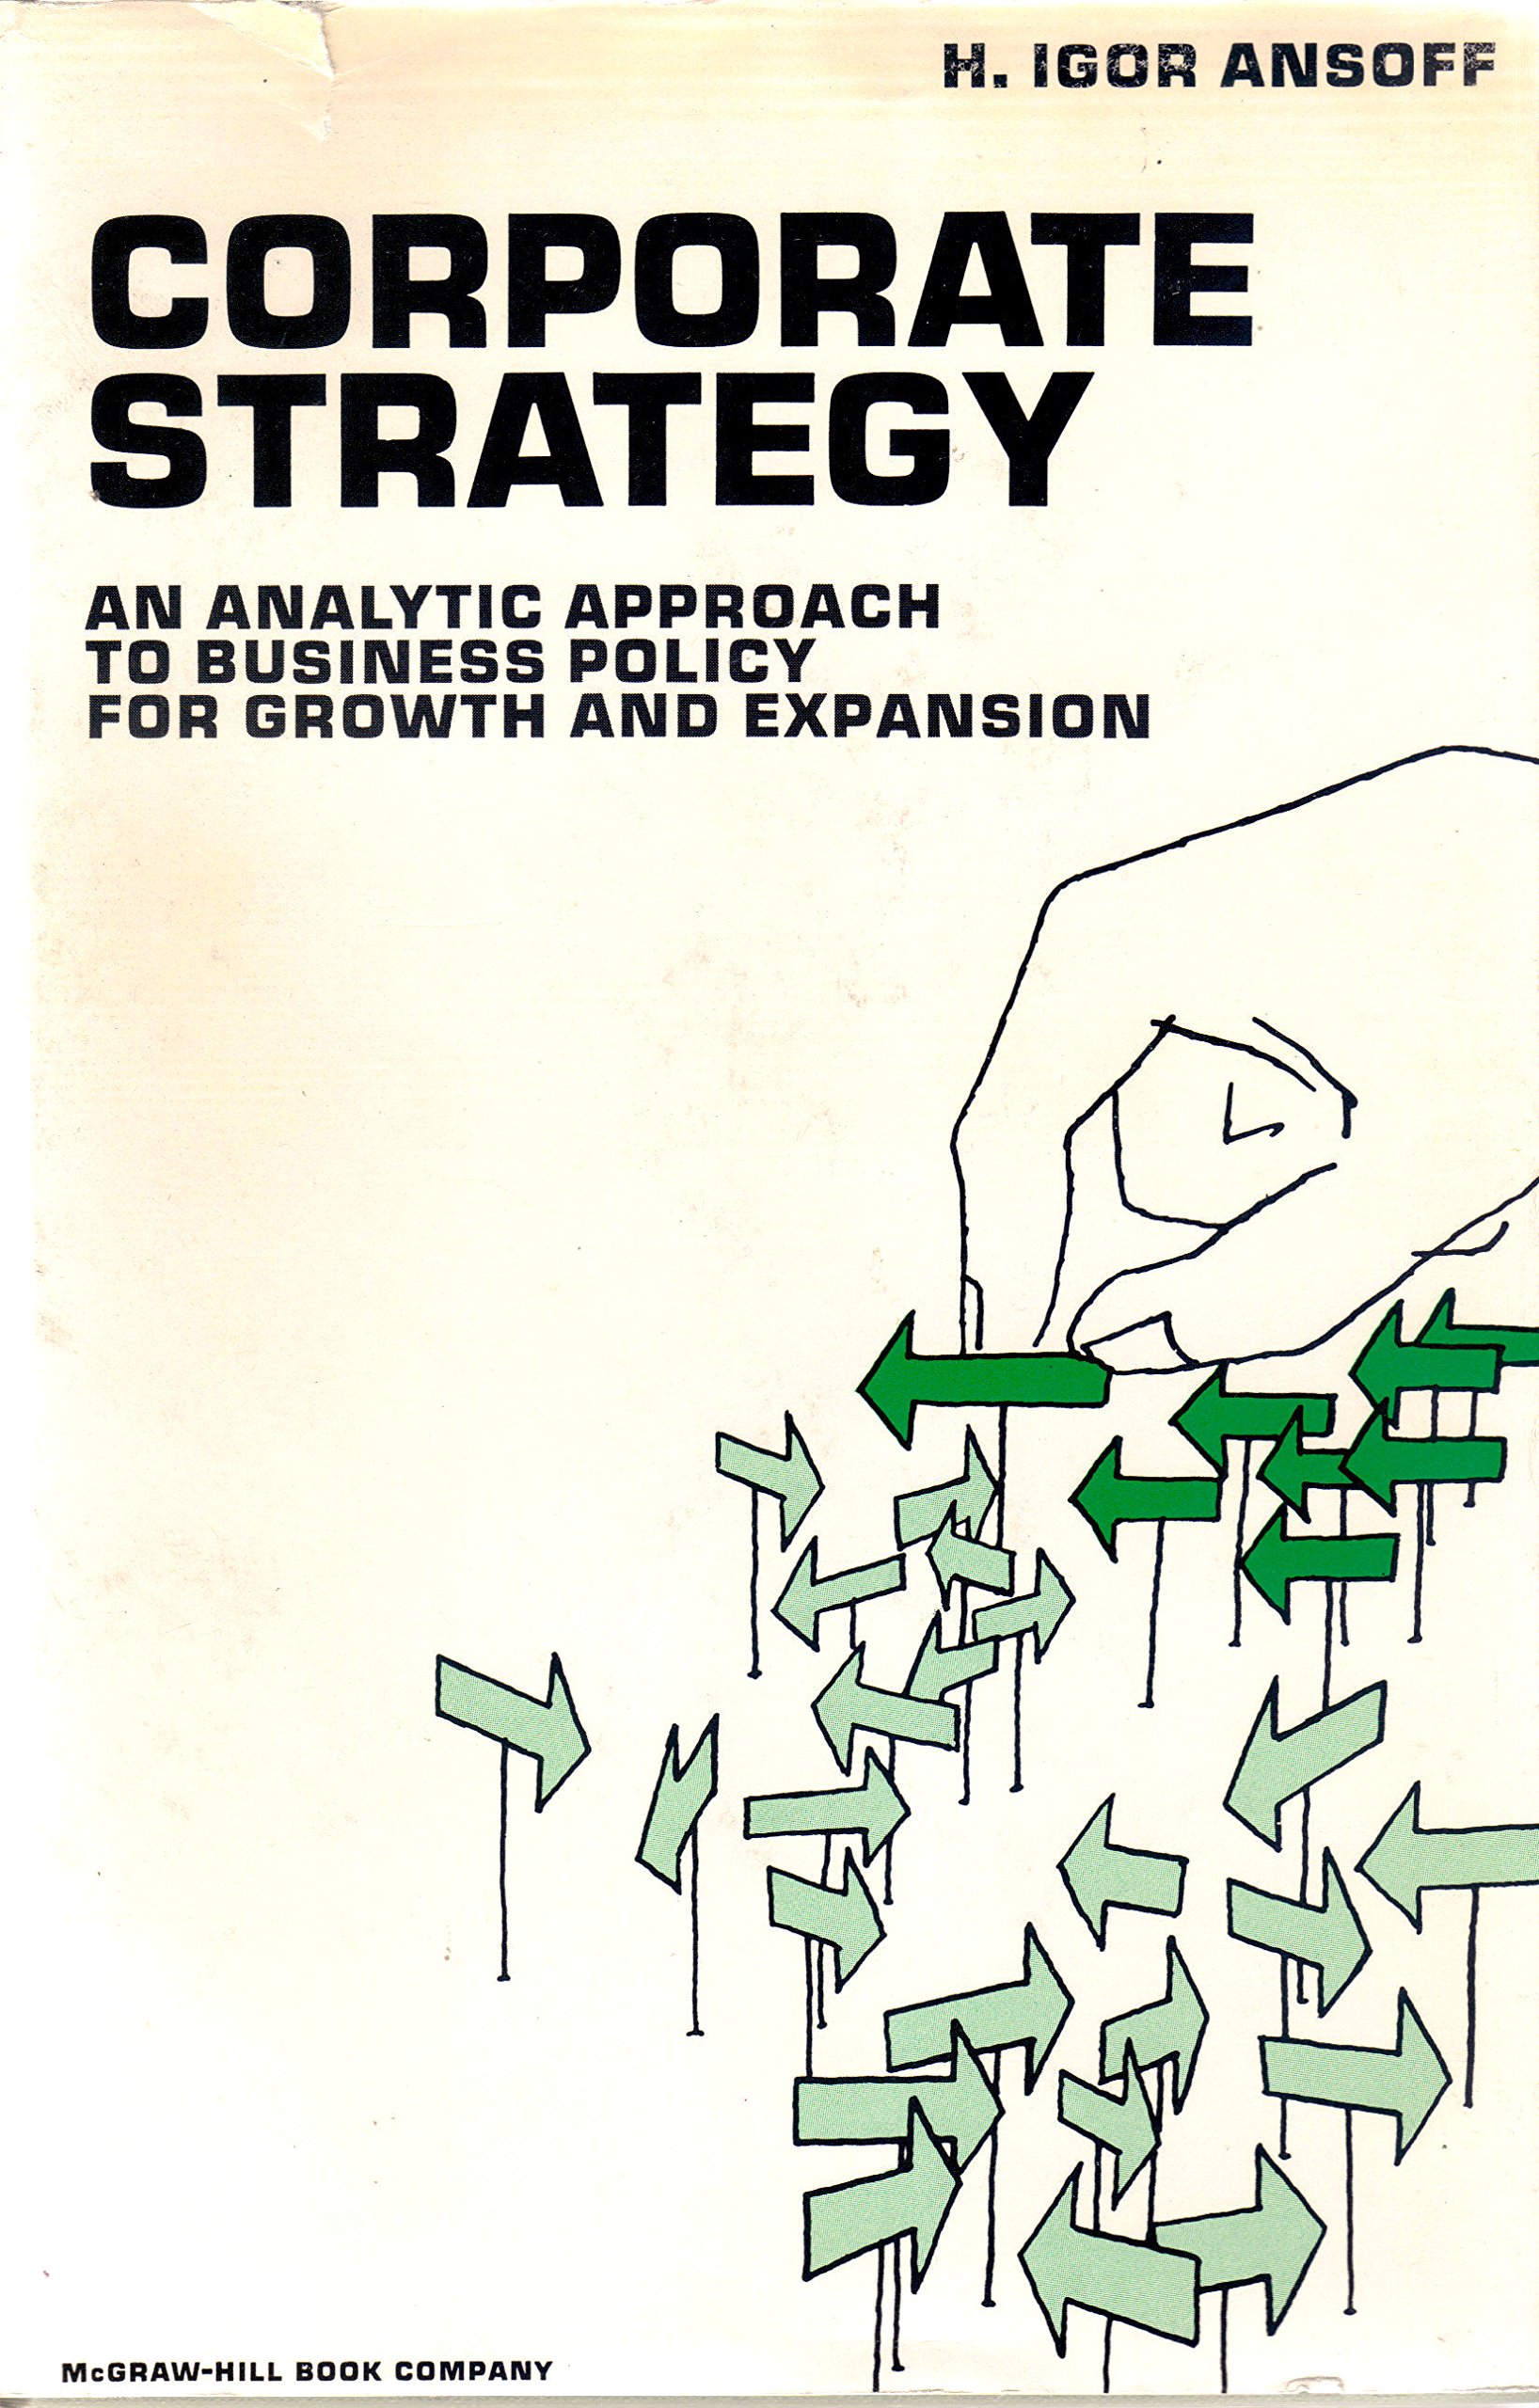 Download free Ansoff 1965 Corporate Strategy Pdf